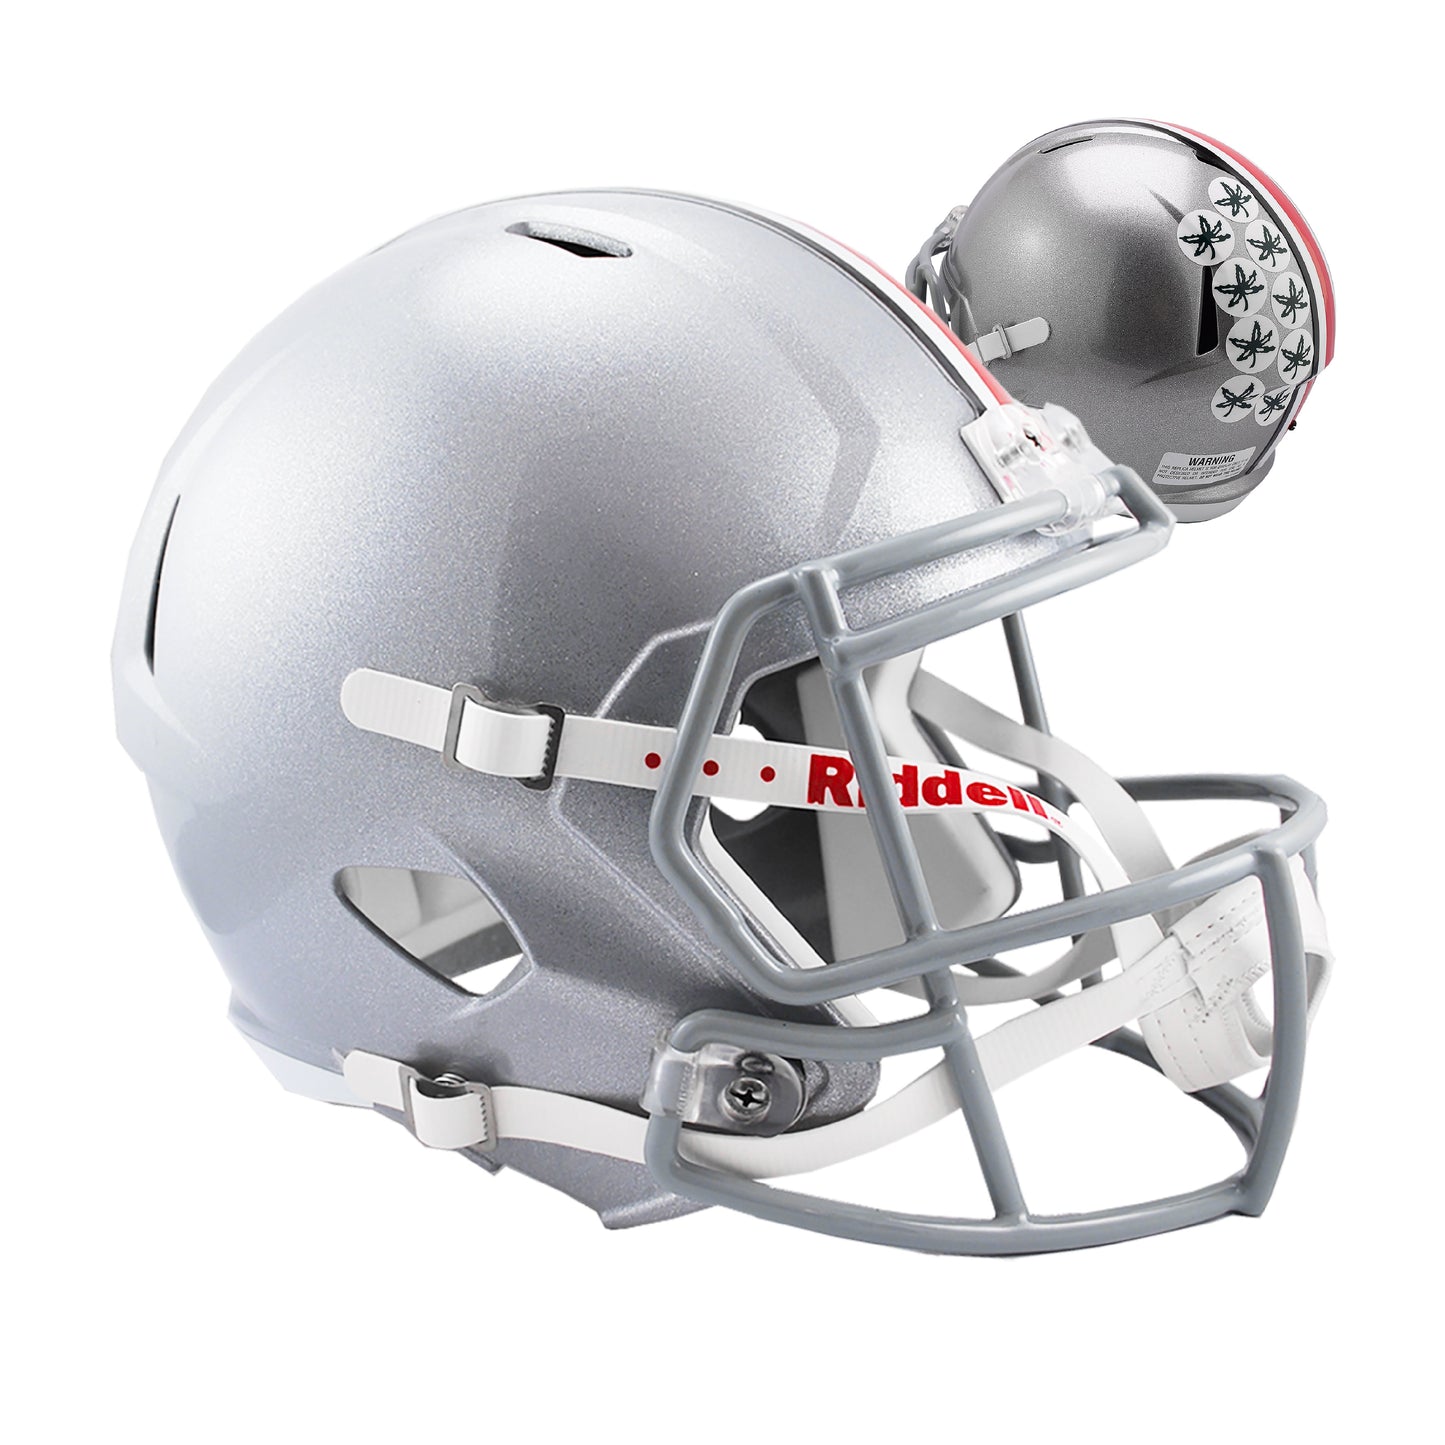 Ohio State Buckeyes Riddell Speed Full Size Replica Football Helmet